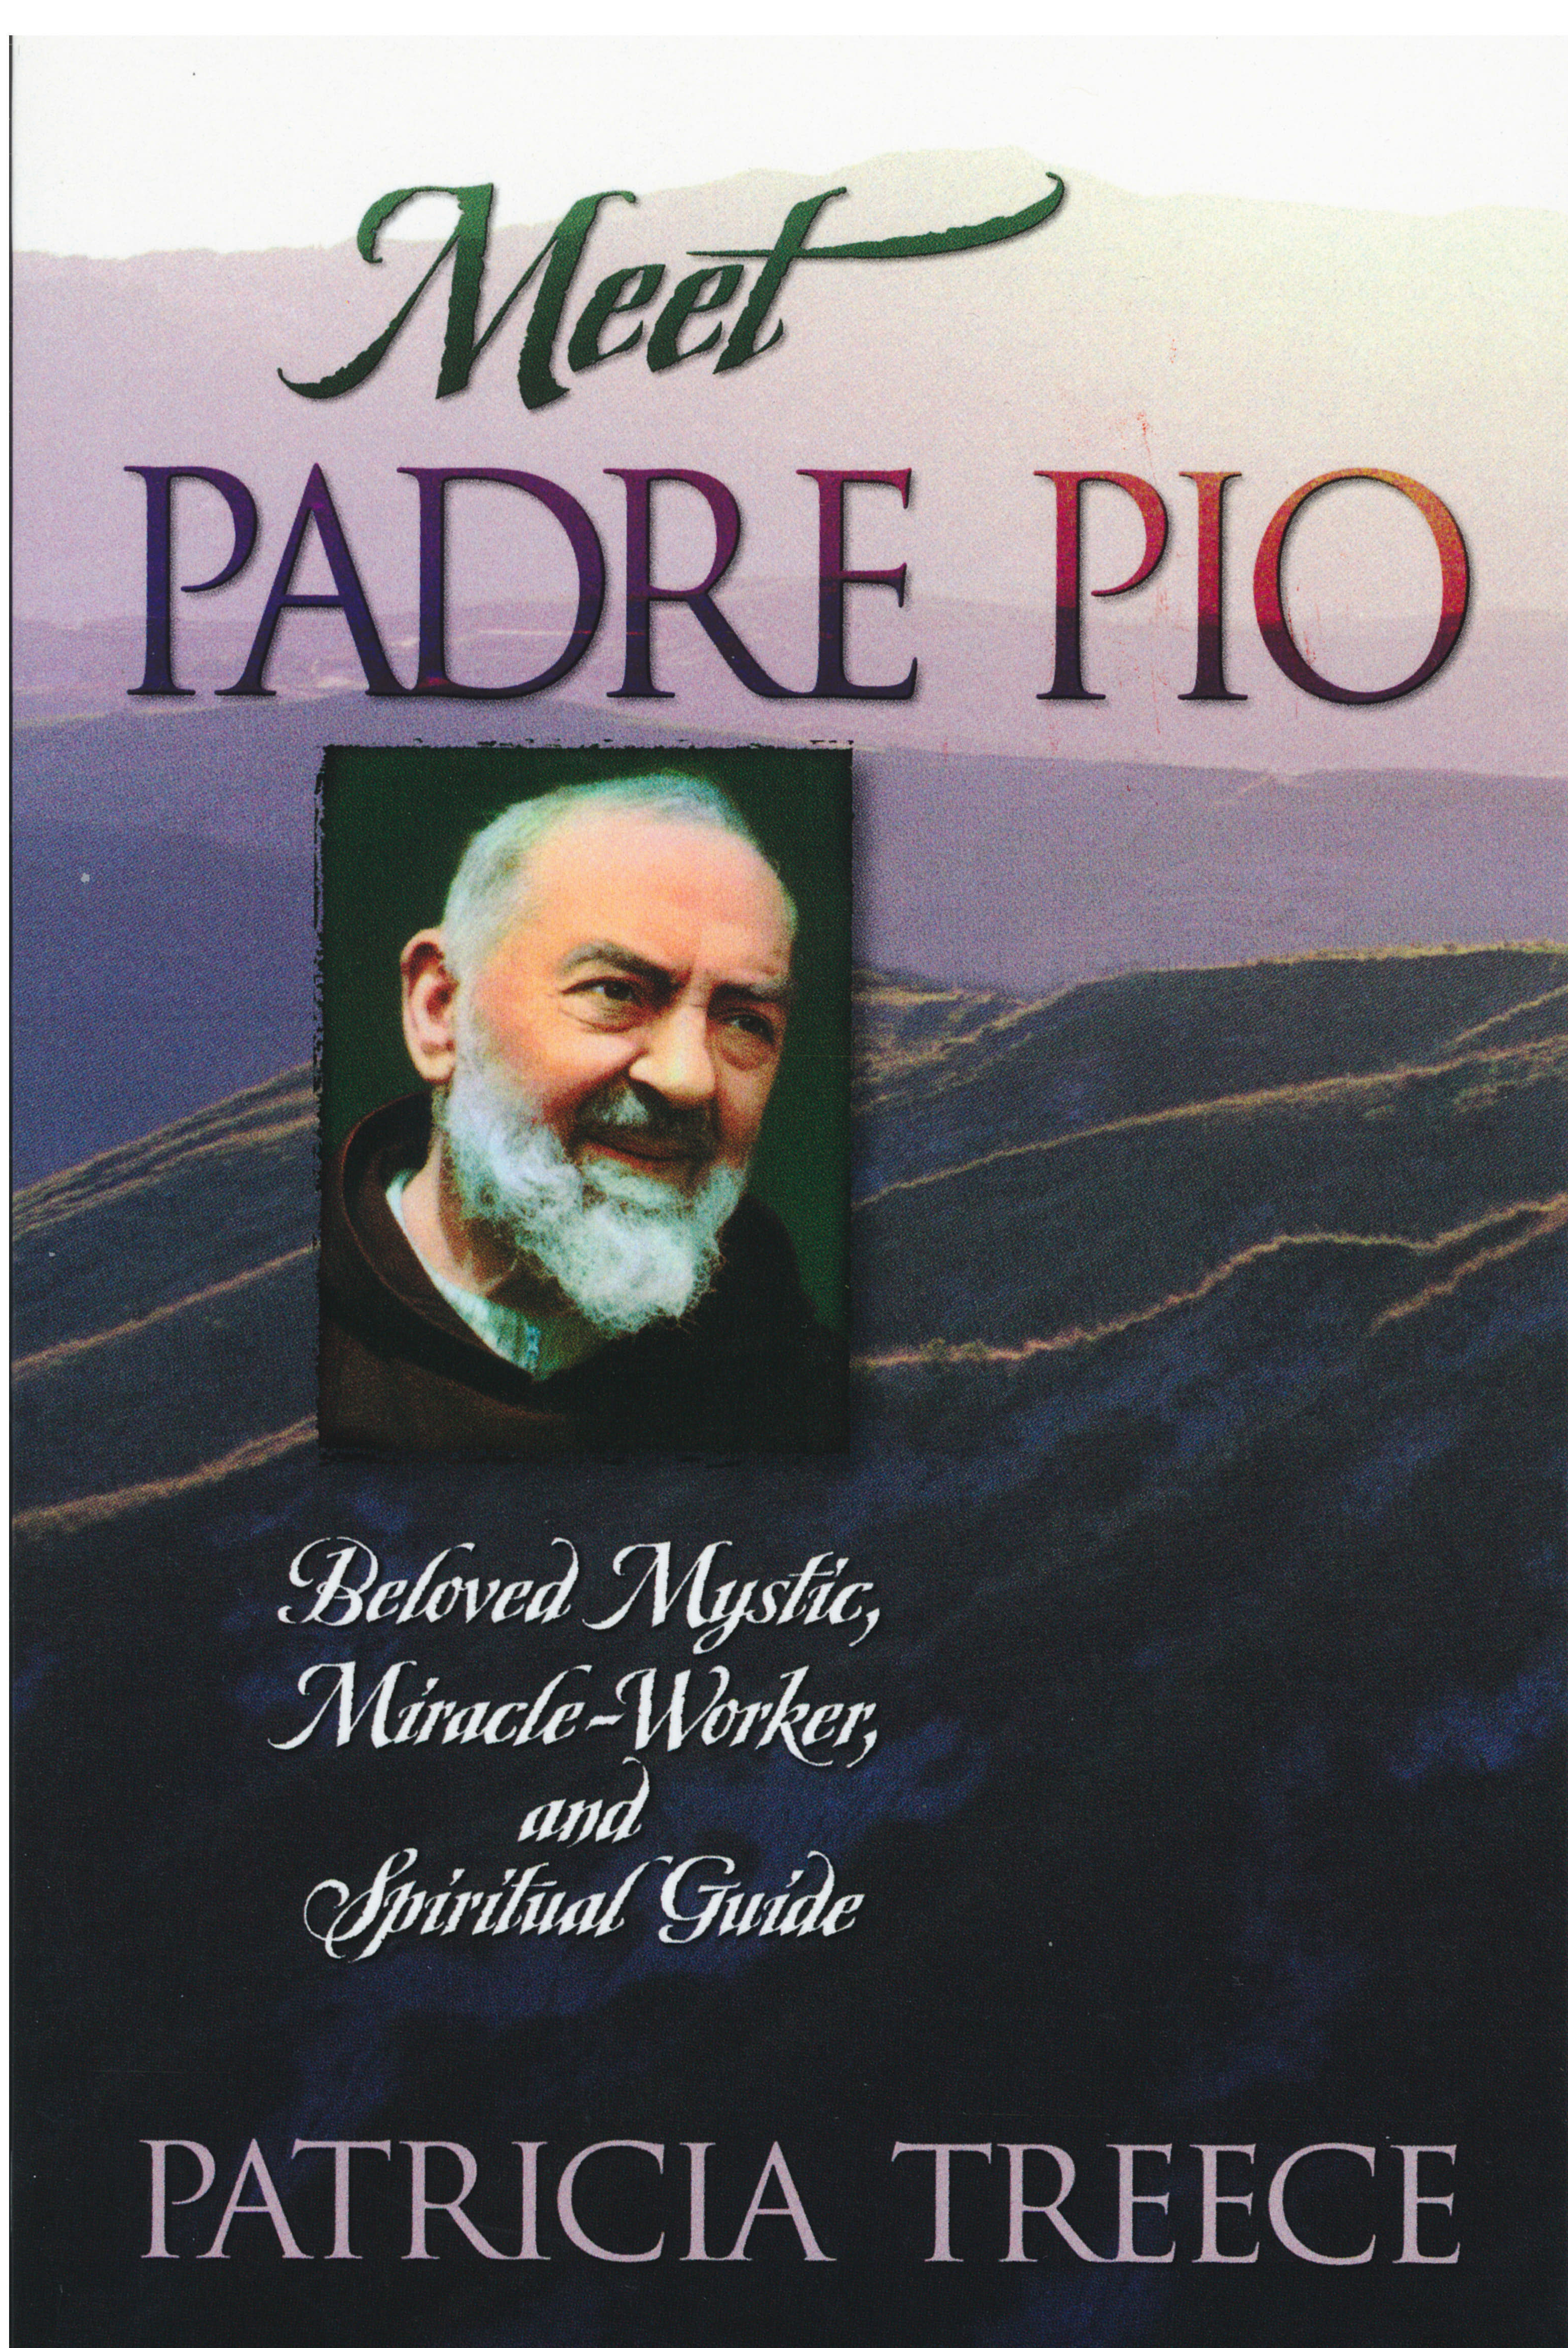 Meet Padre Pio by Patricia Treece 108-9781569552490